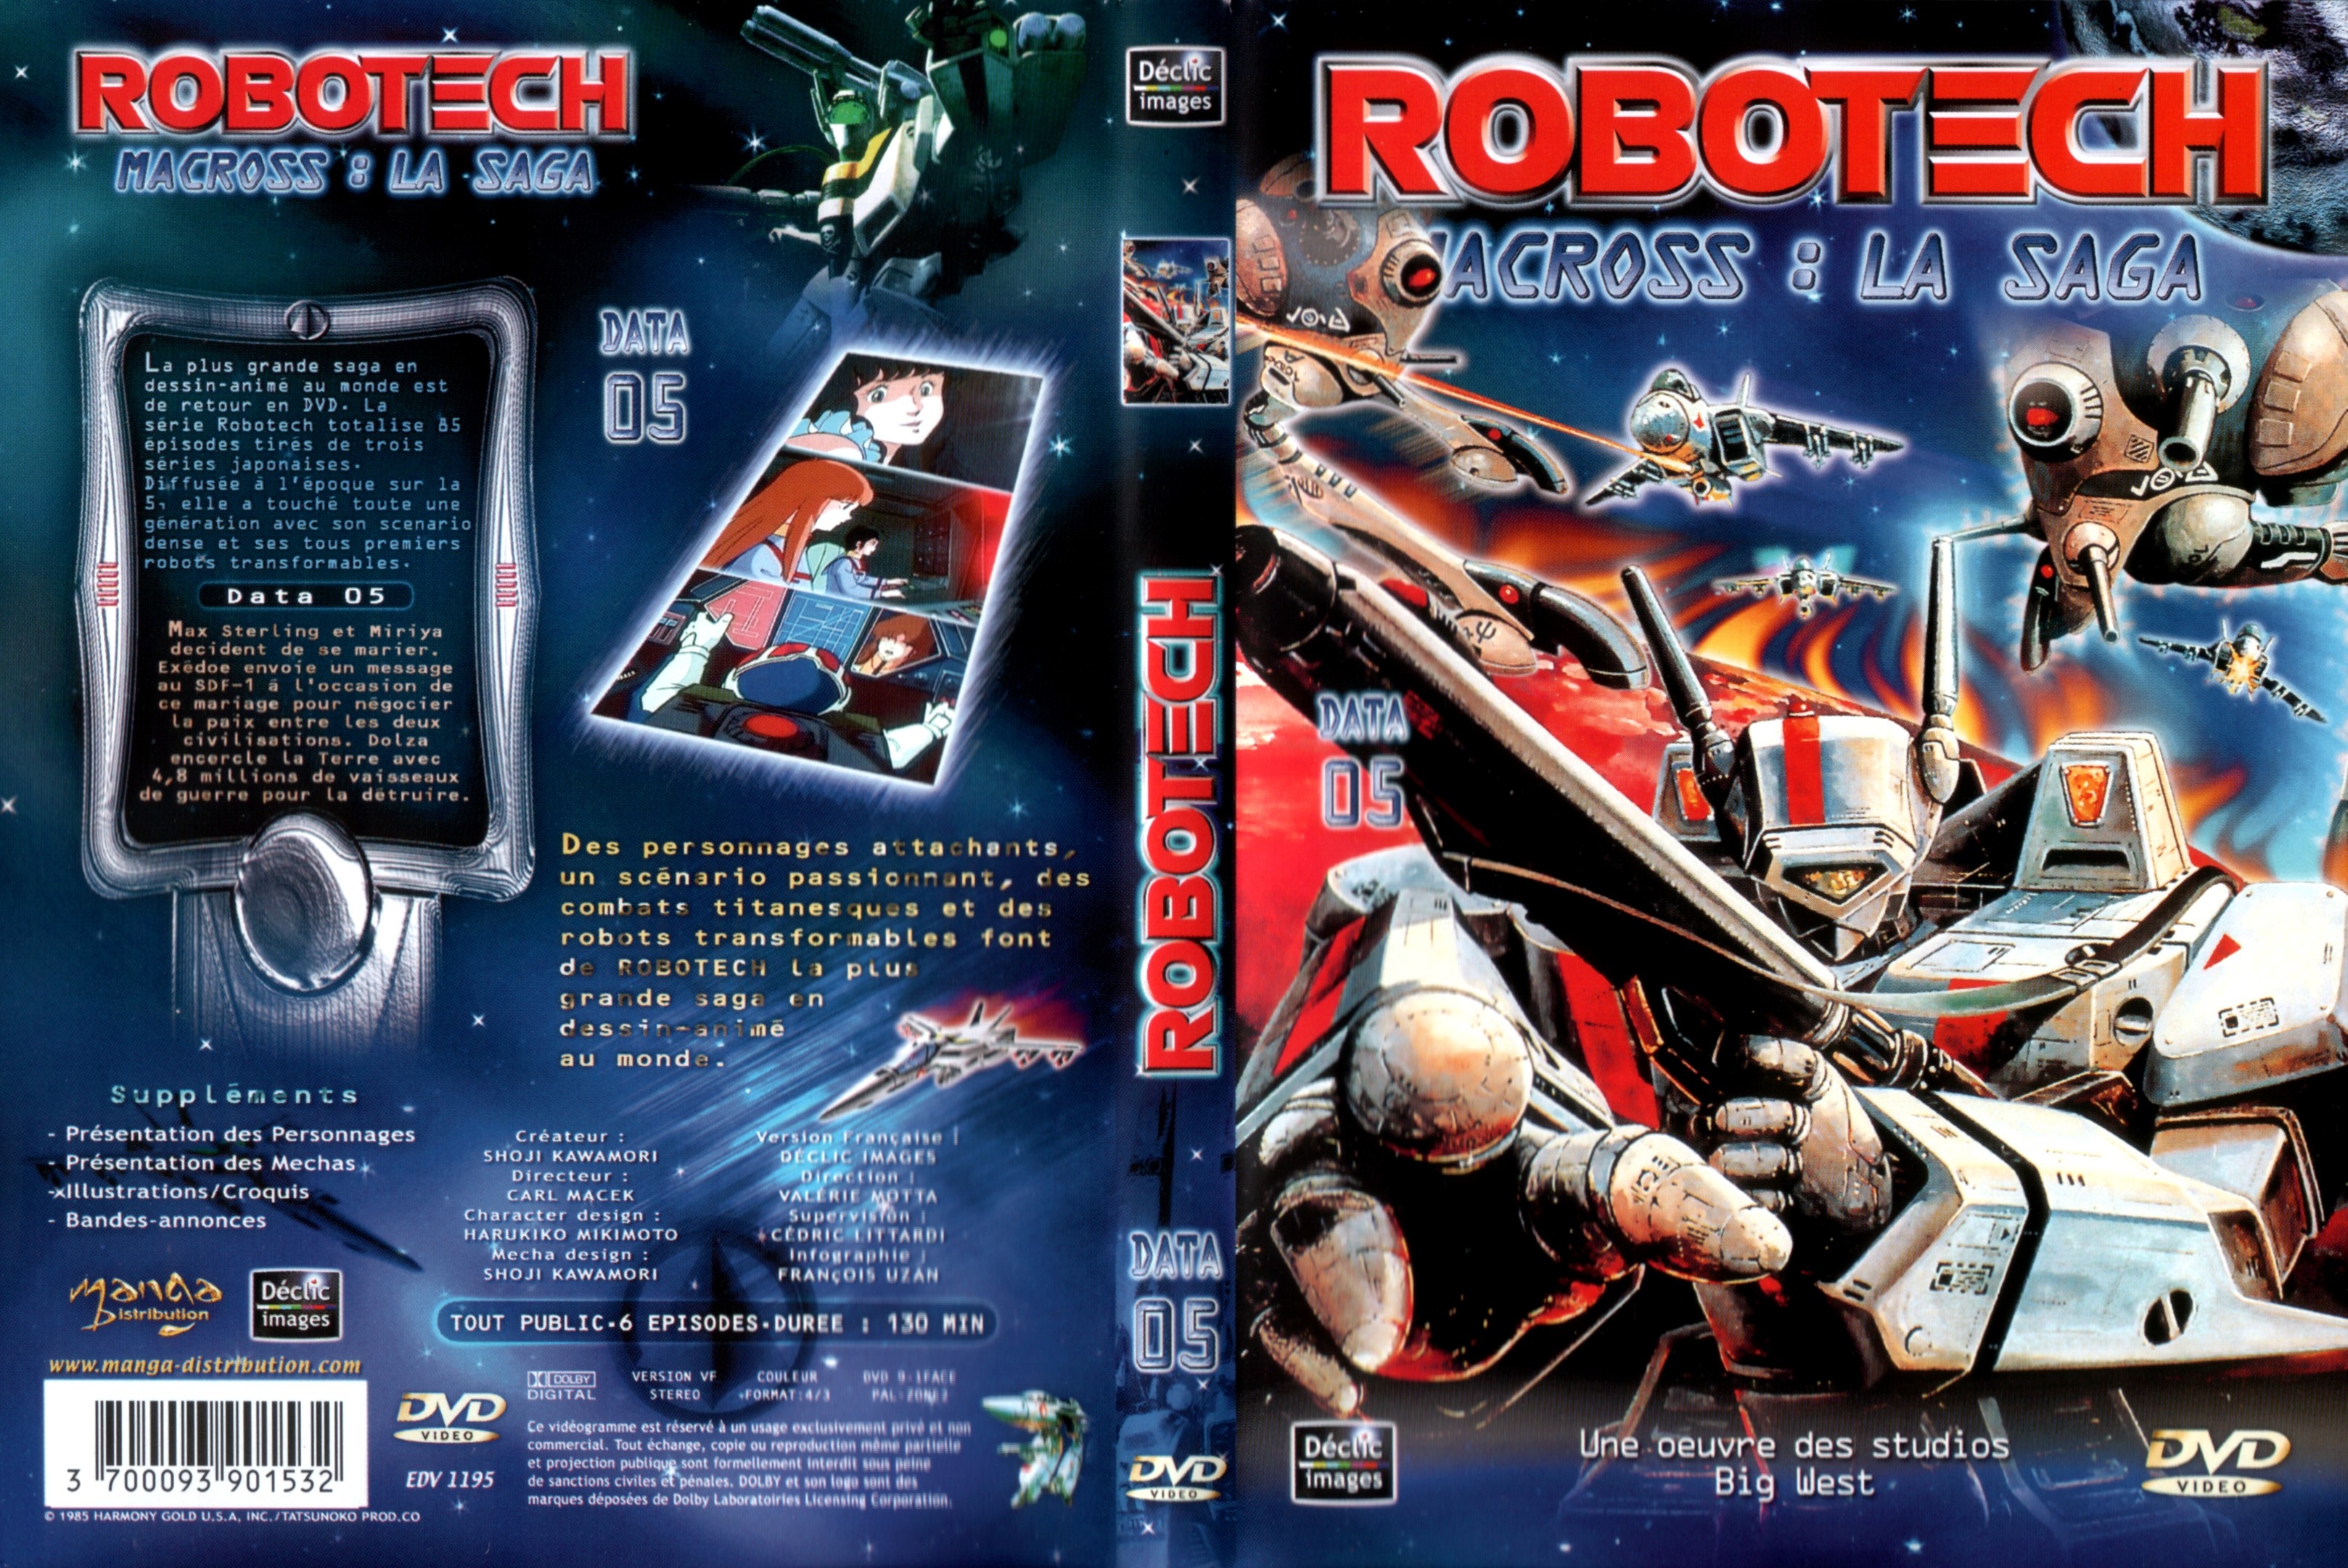 Jaquette DVD Robotech Macross la saga vol 5